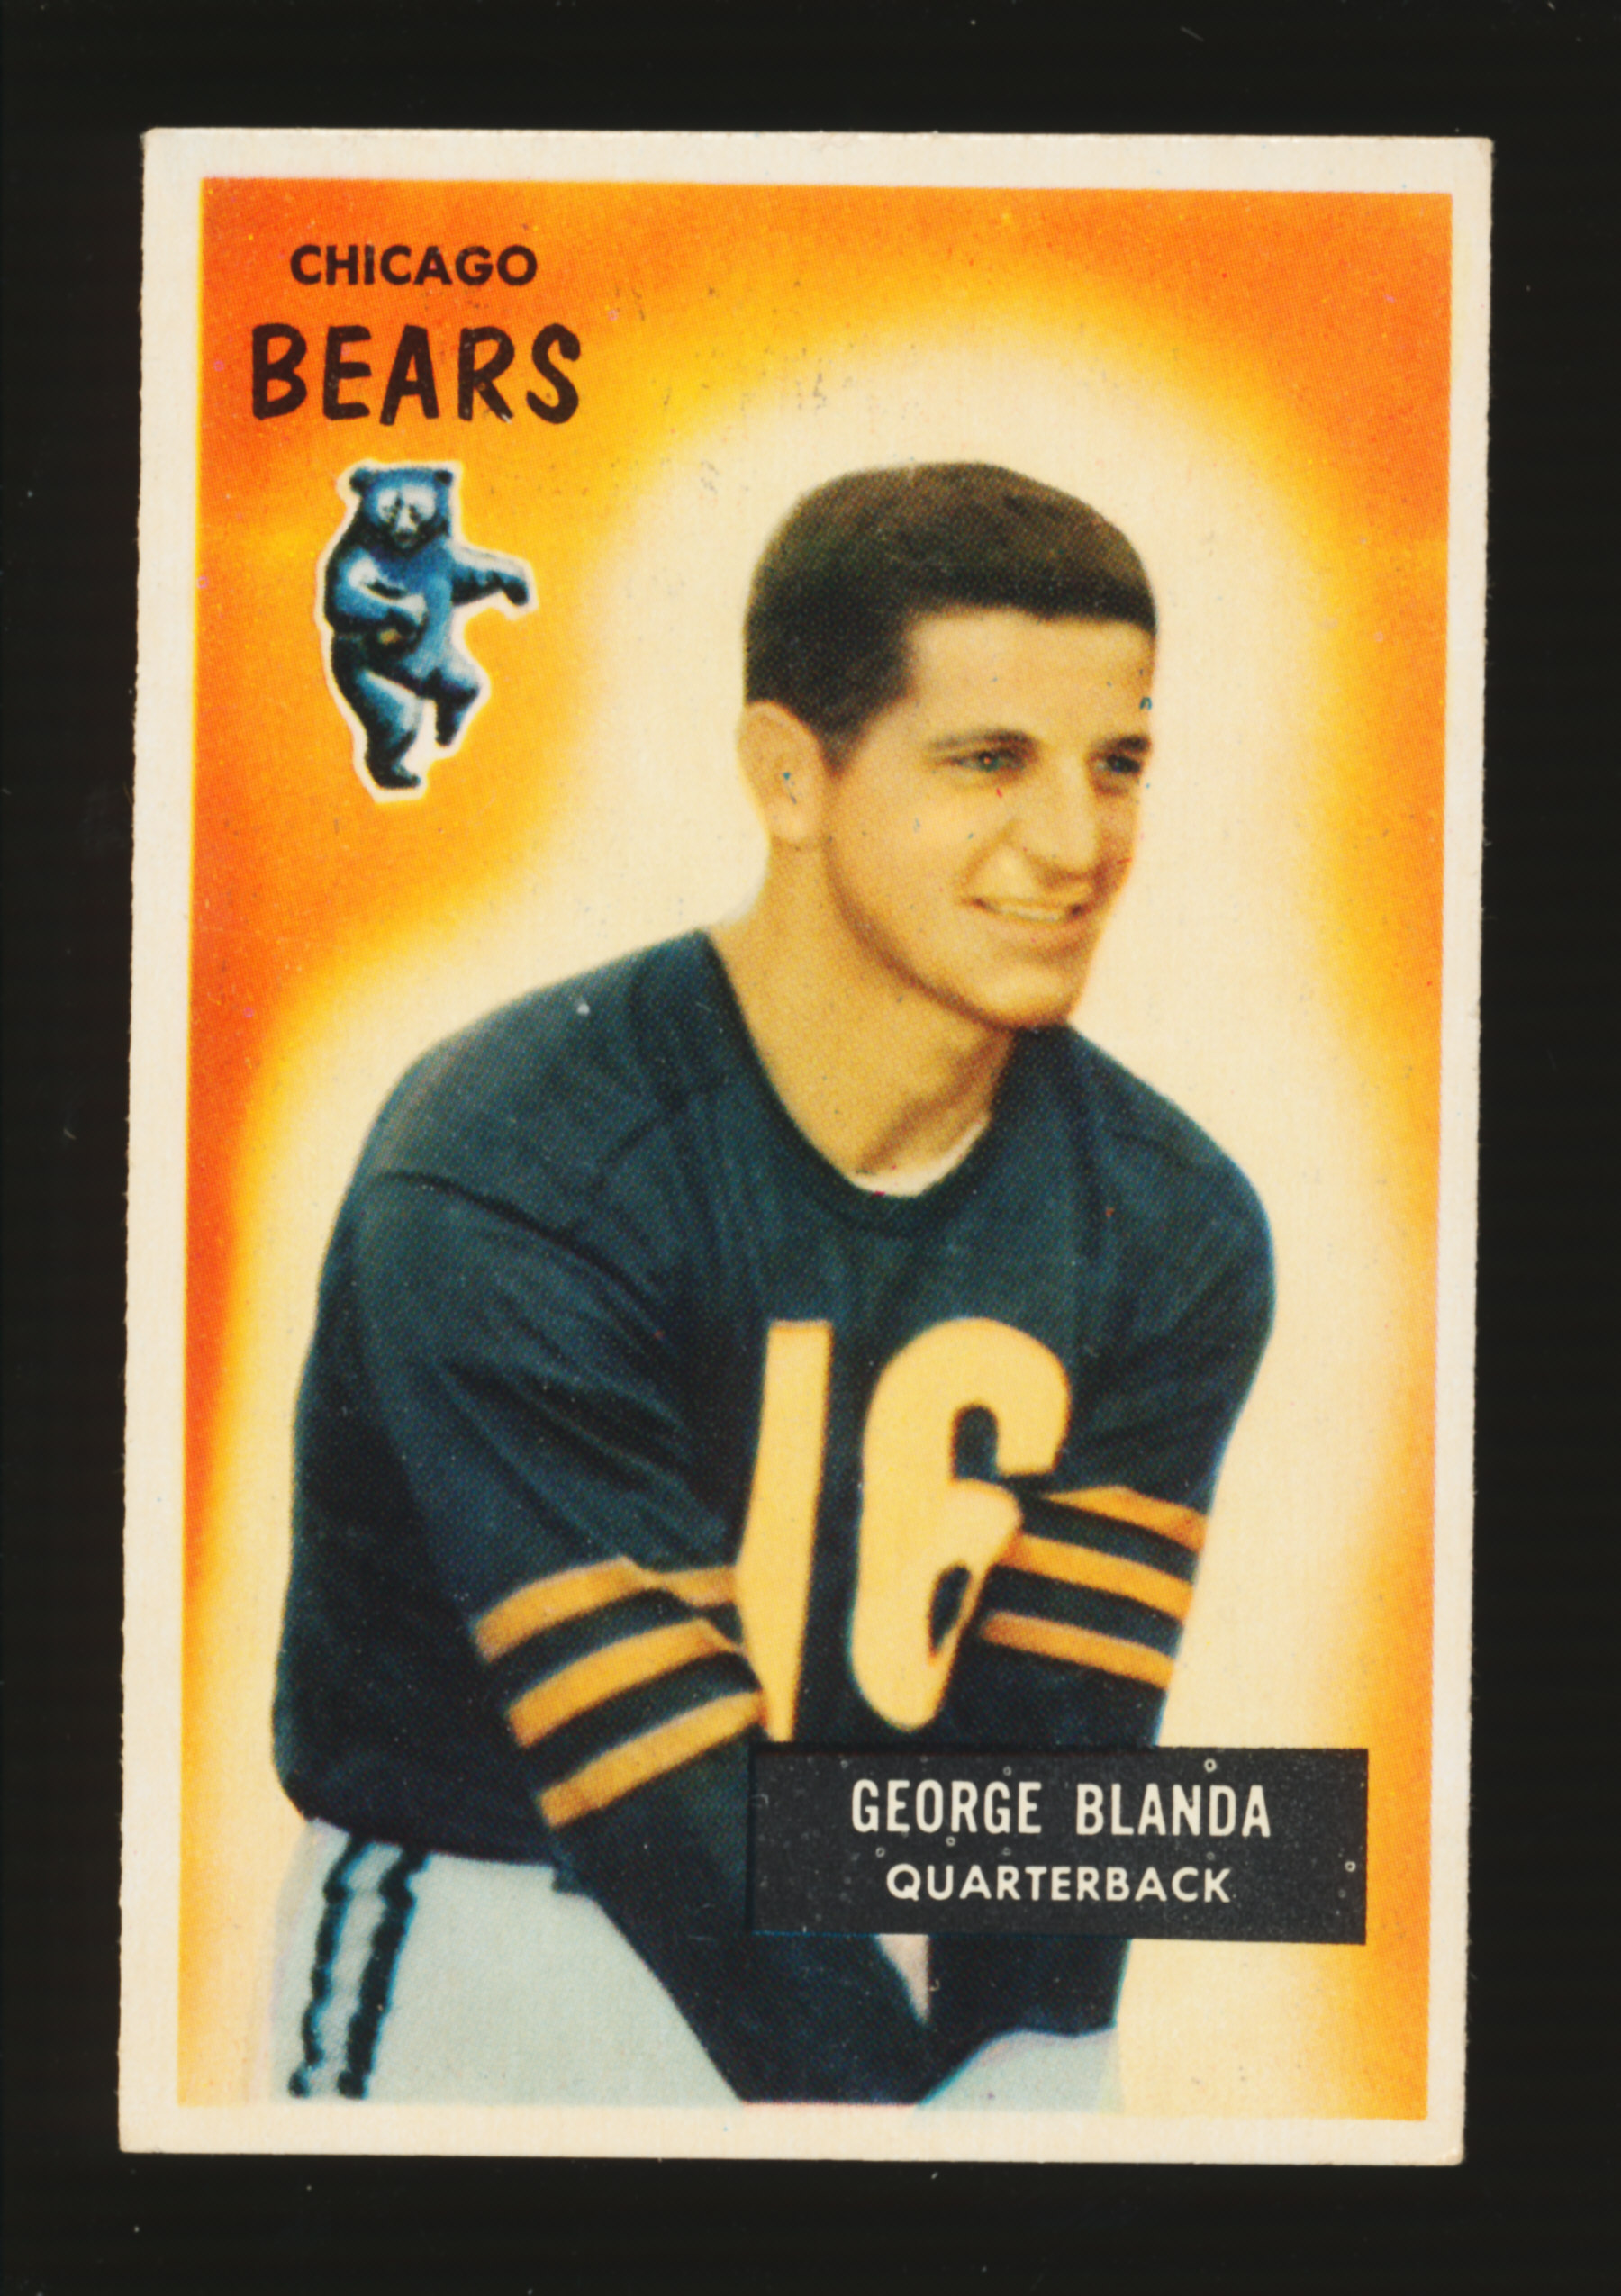 George Blanda away jersey